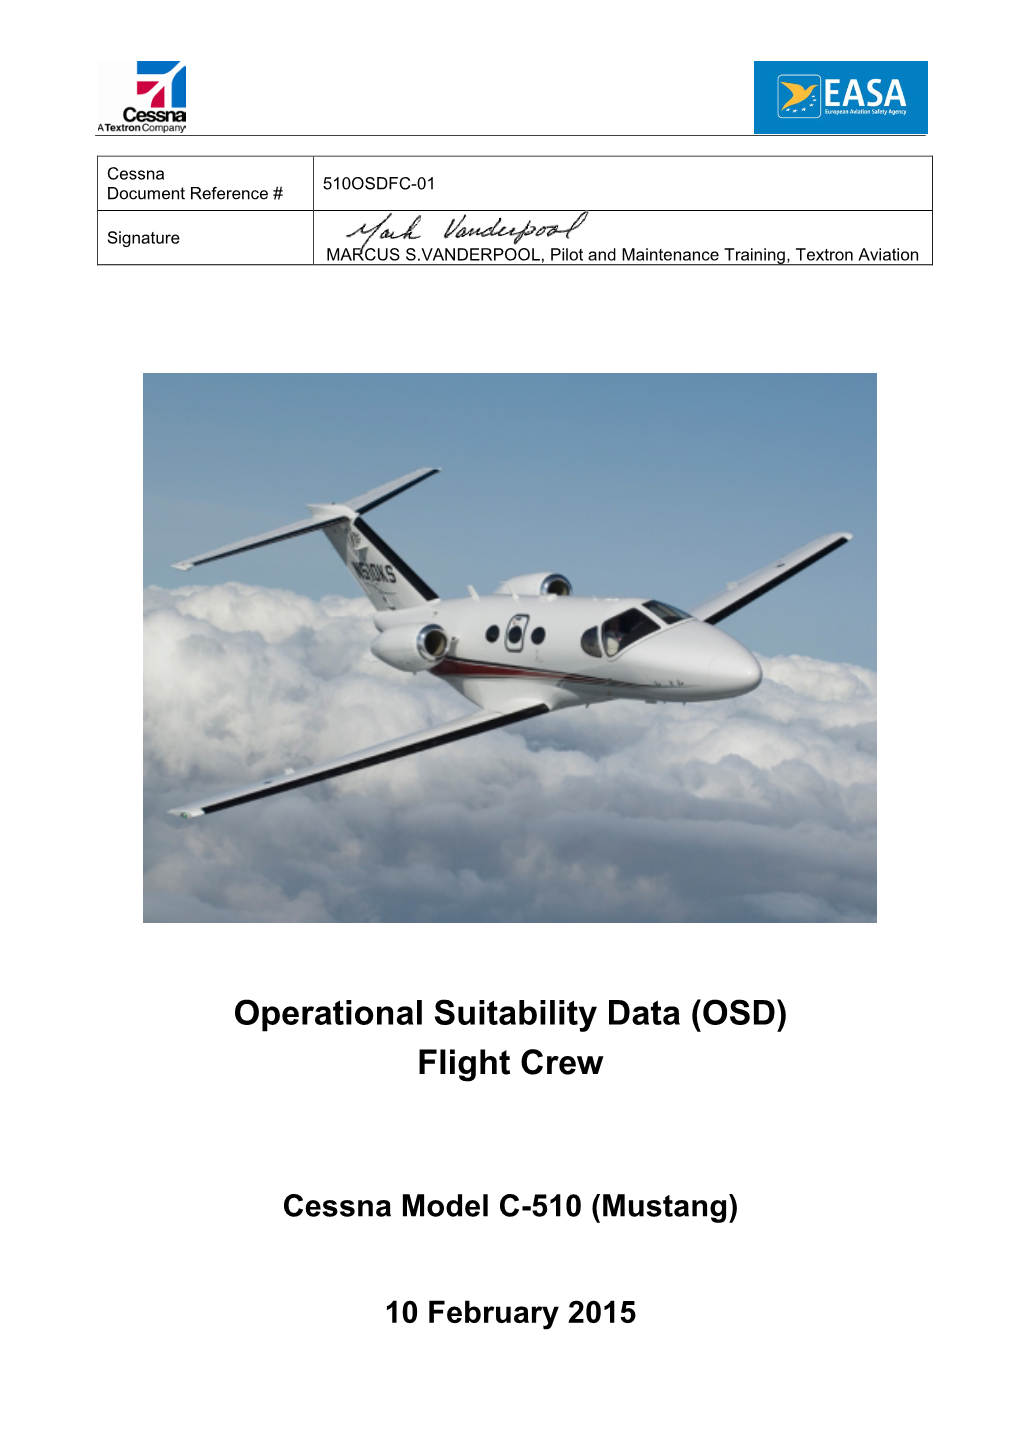 Operational Suitability Data (OSD) Flight Crew